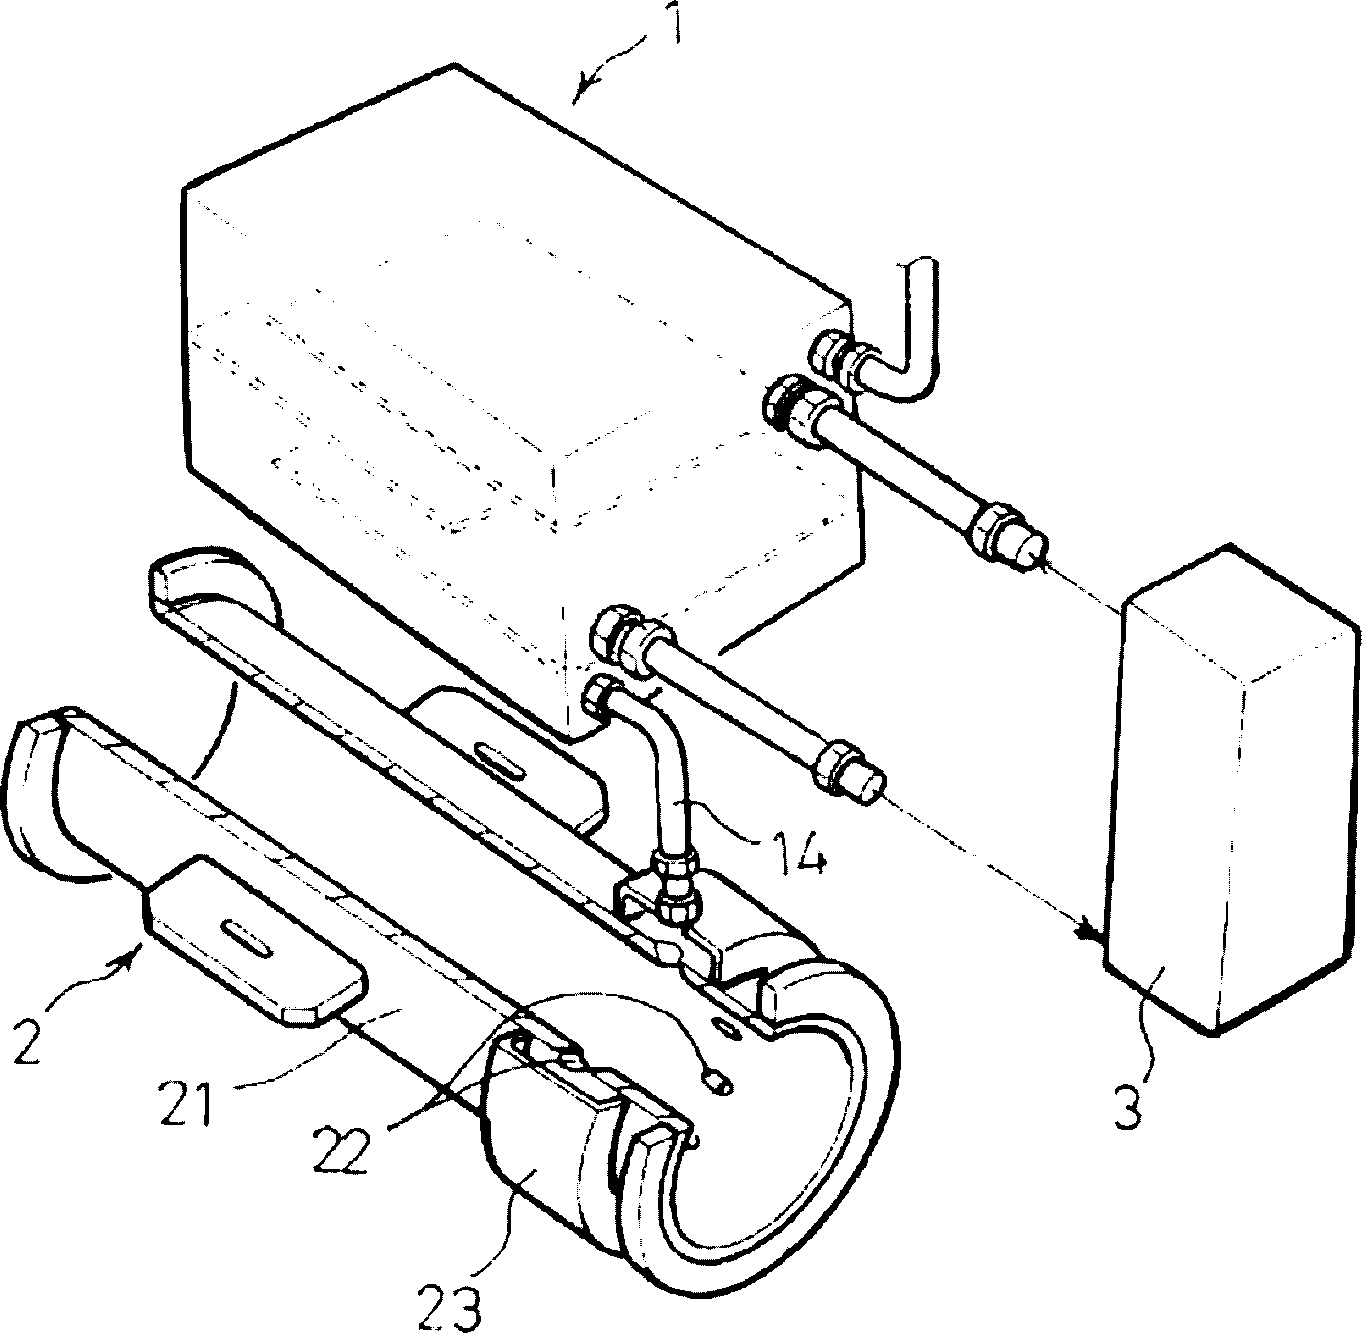 Nitrogen gas injection apparatus